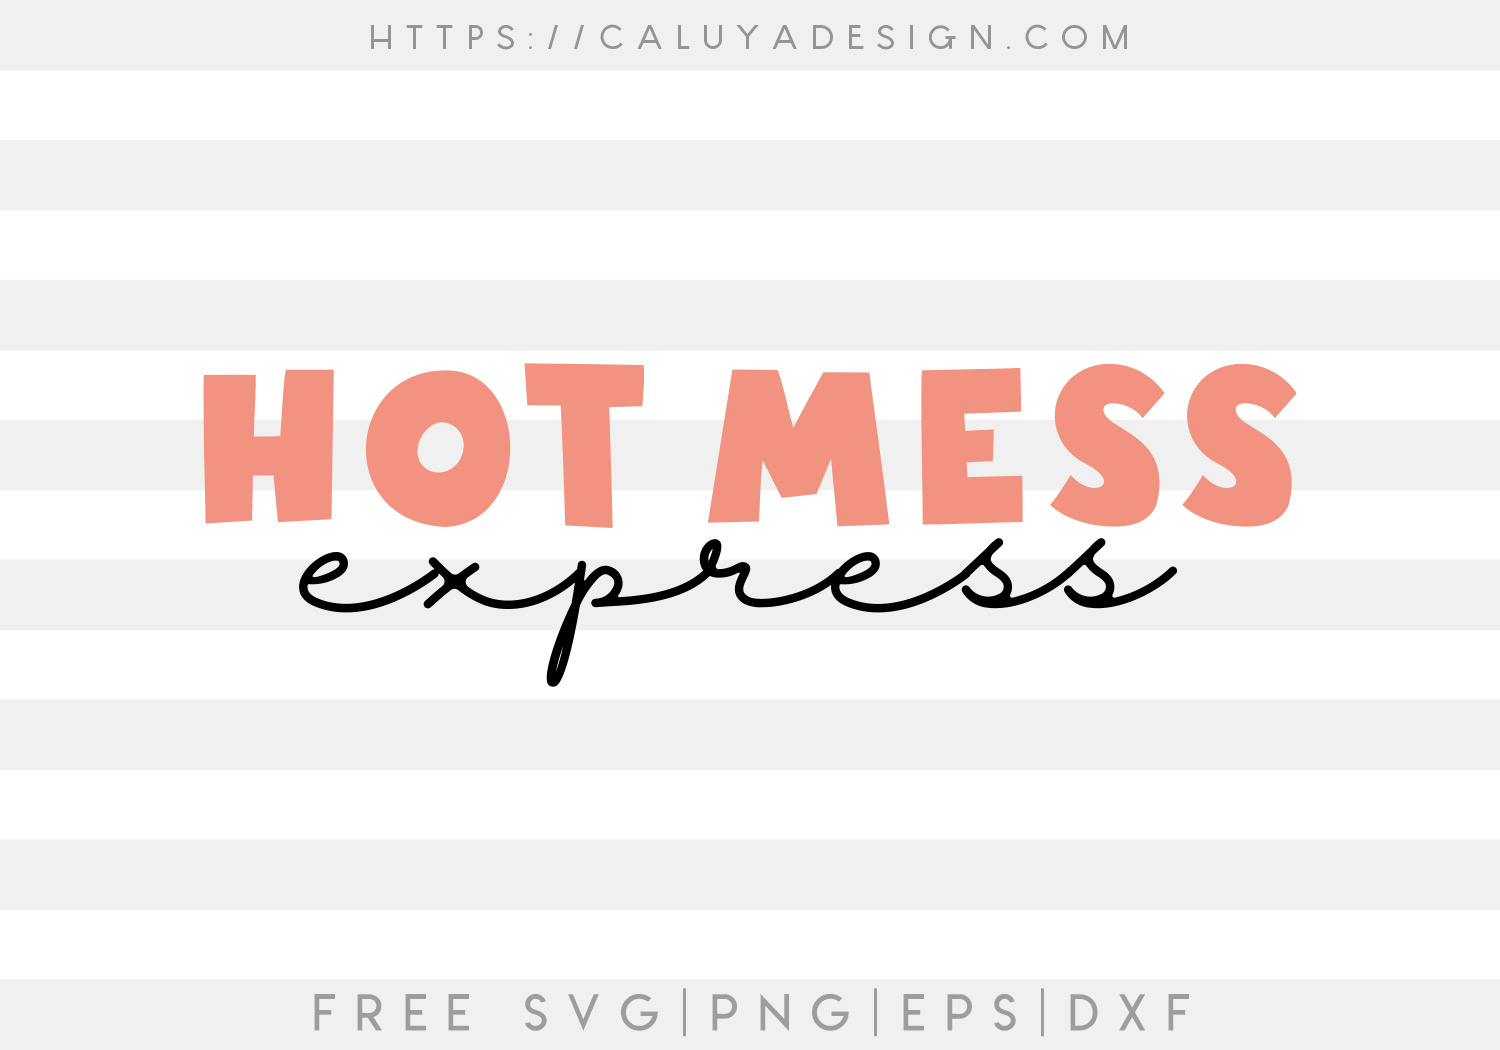 Free Hot Mess Express SVG